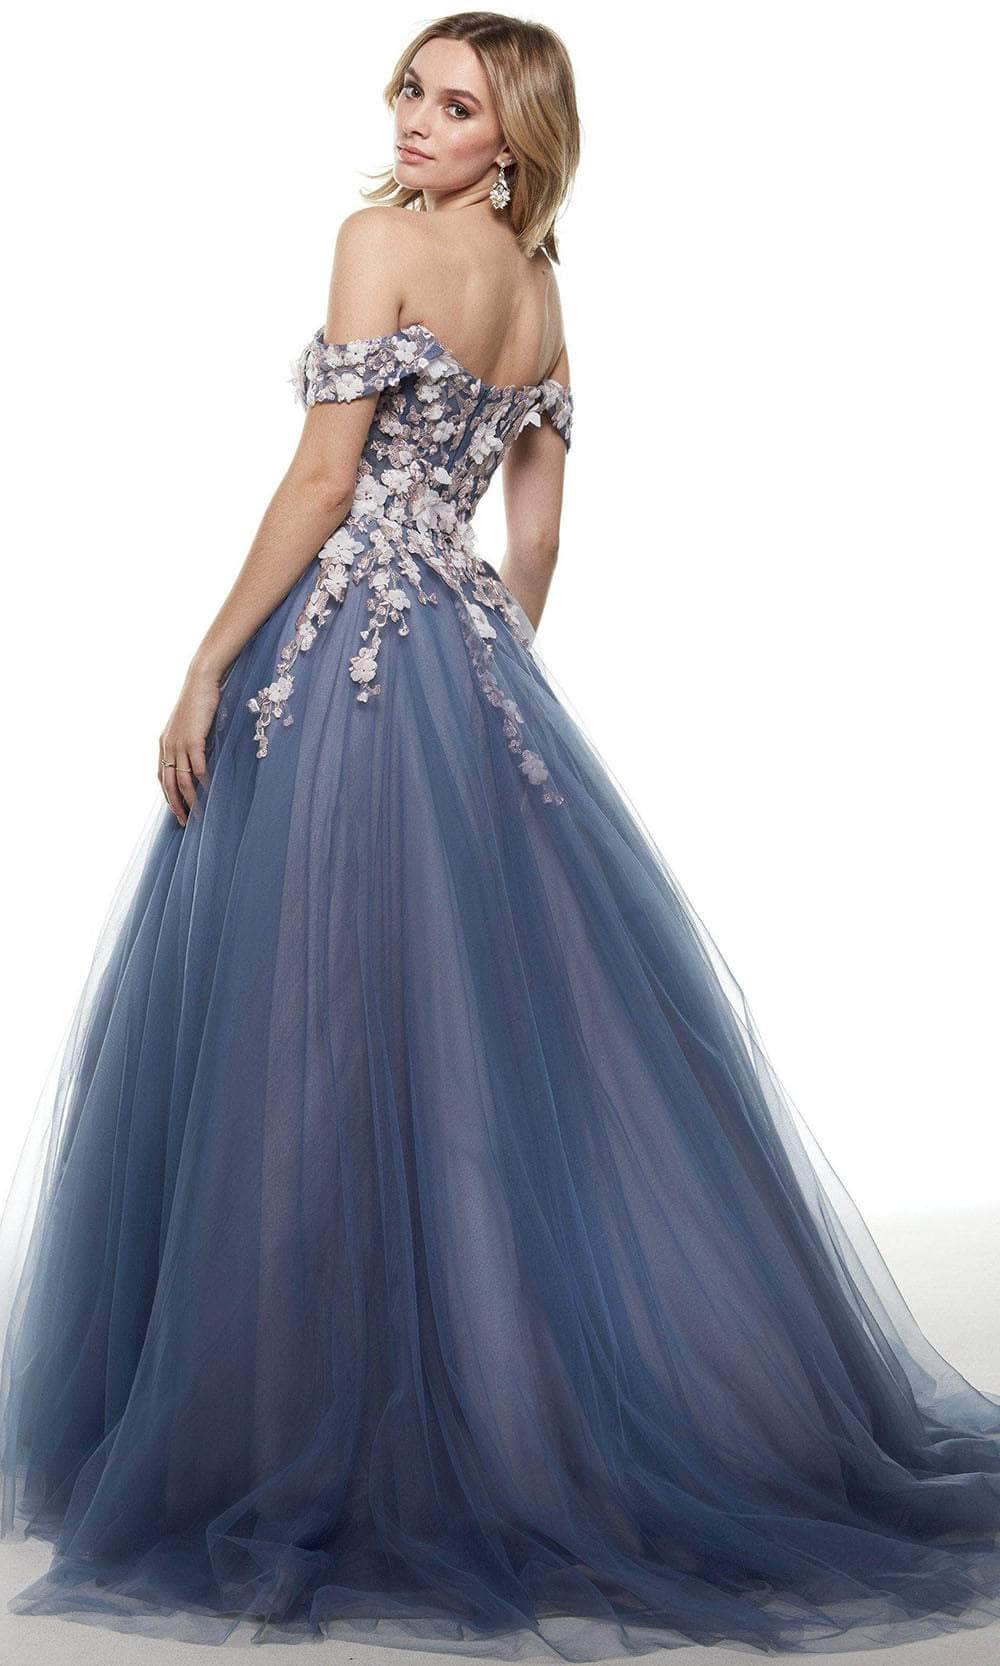 Alyce Paris 61017 - Off-shoulder Sweetheart Neck Long Dress Special Occasion Dress